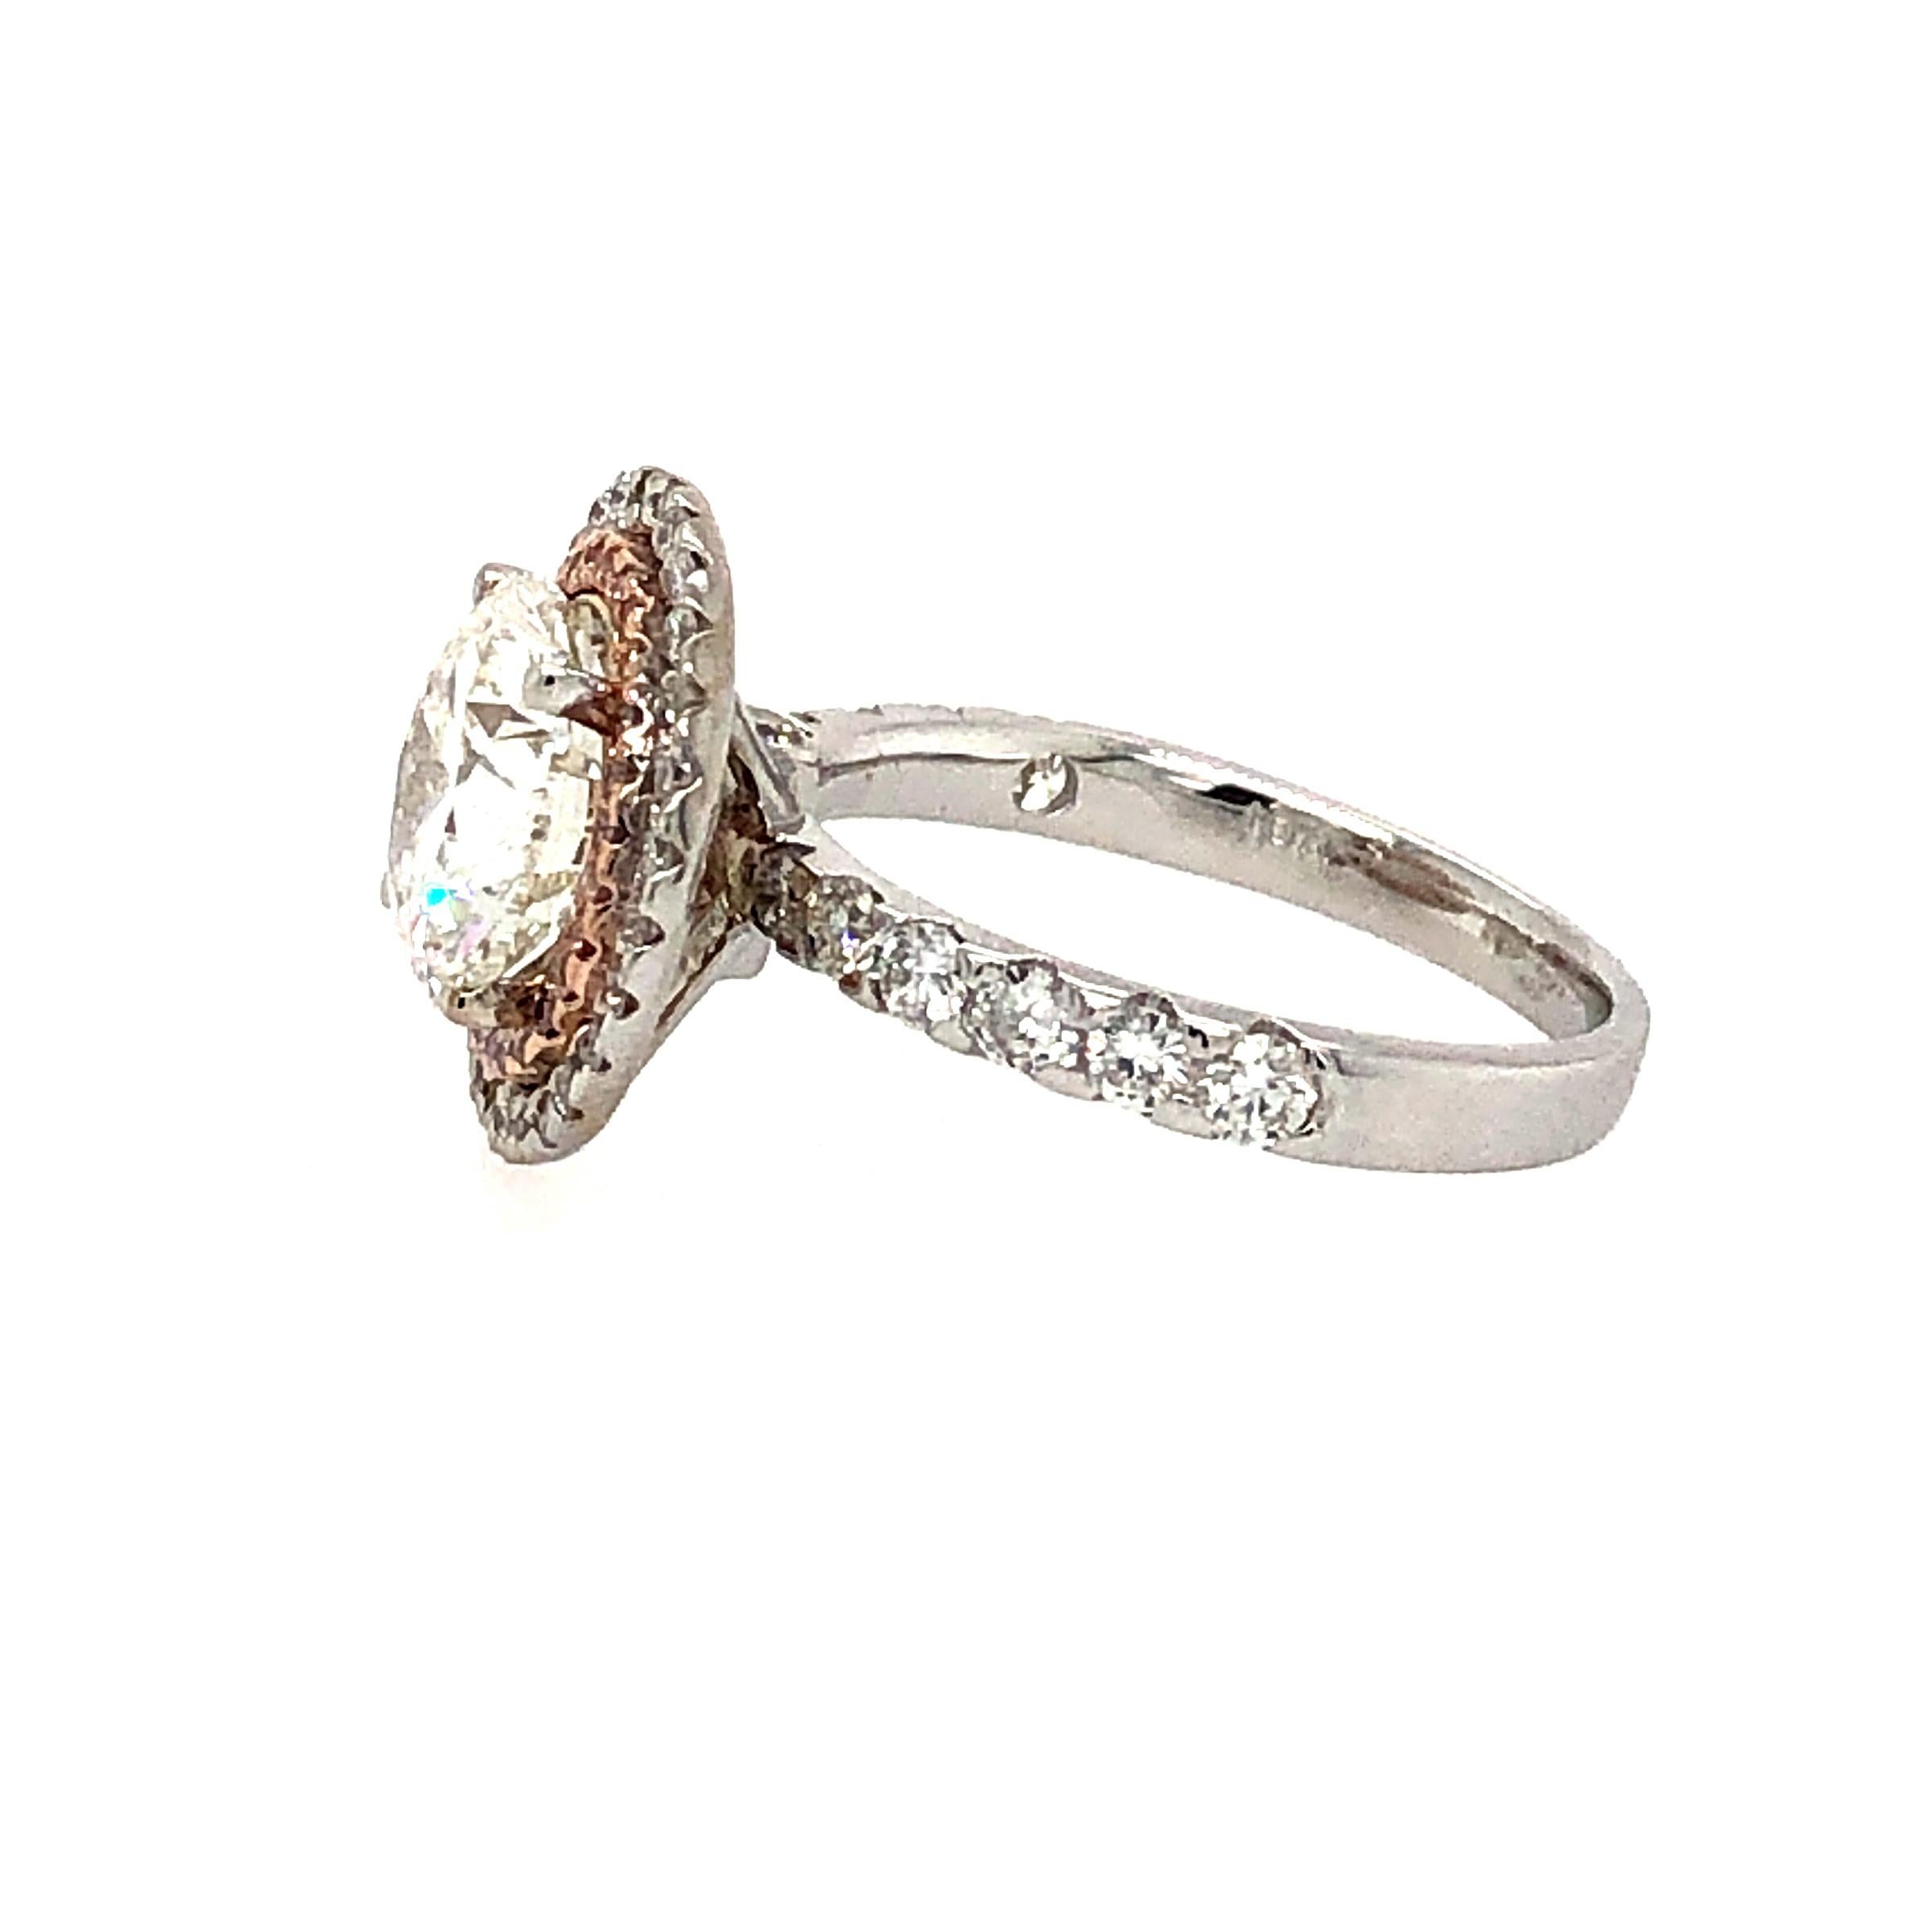 Brilliant Cut 4.01 Carat Diamond with Pink Diamond Halo Engagement Ring 18 Karat Gold